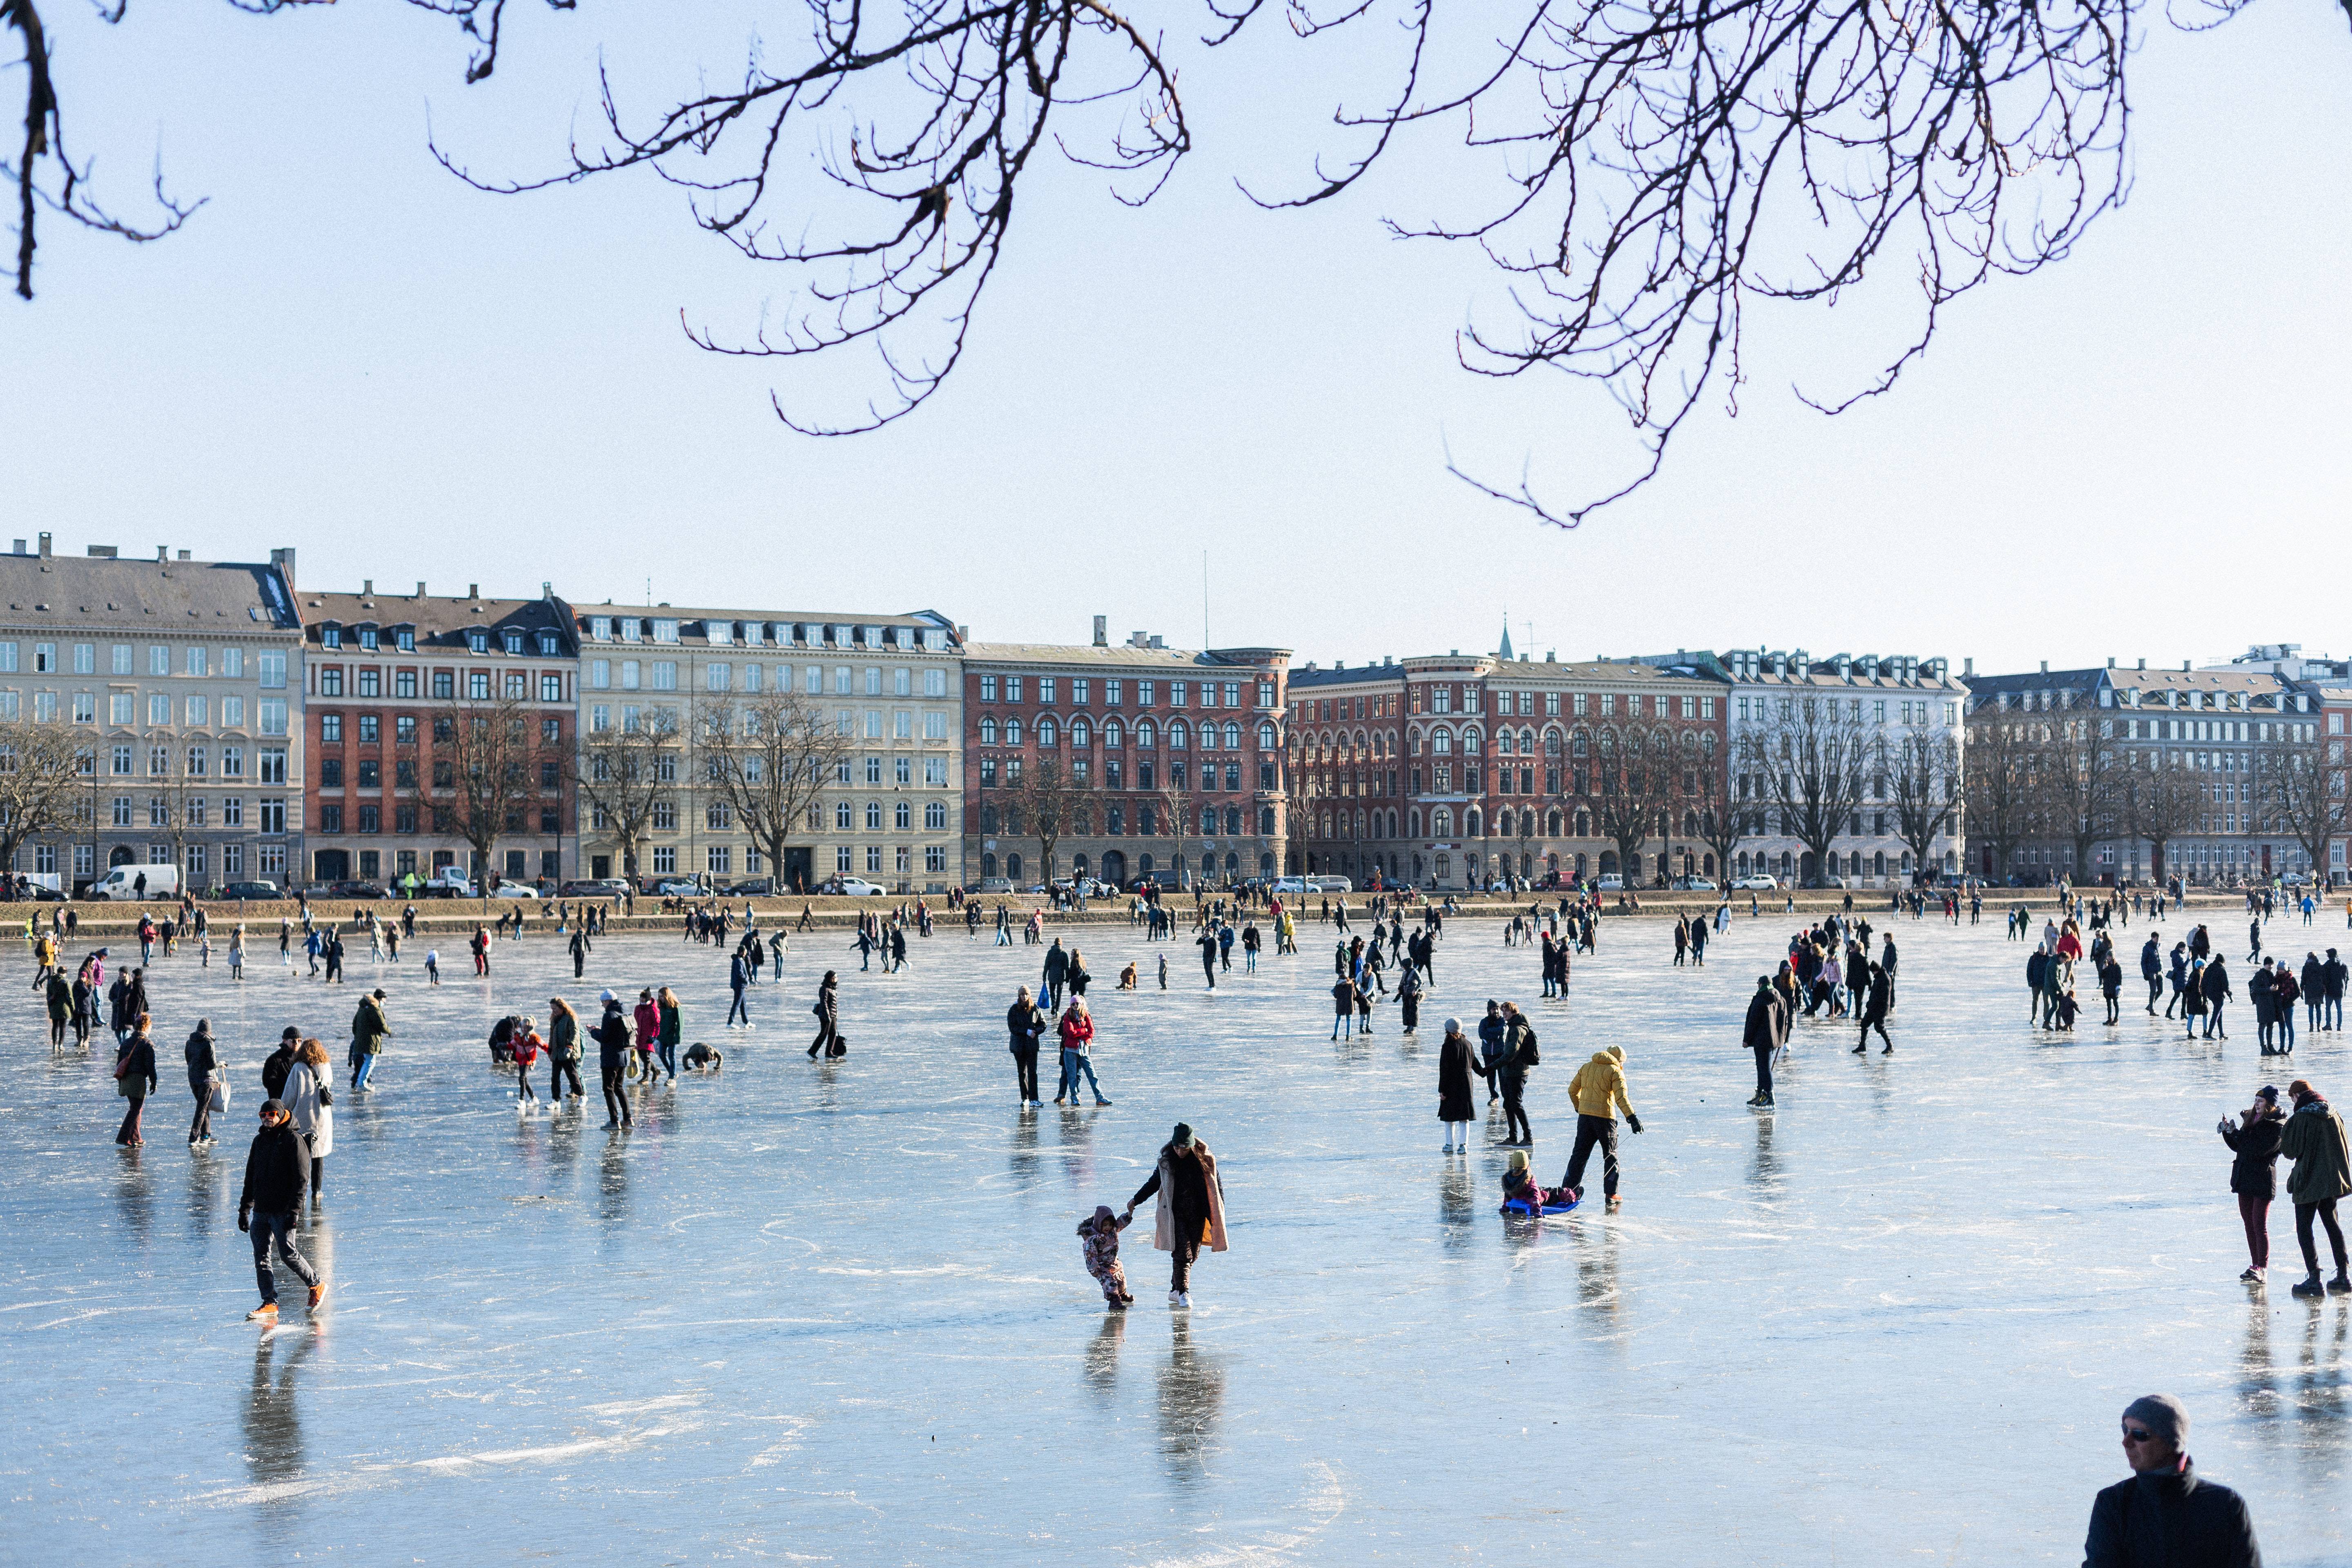 Ice skating on frozen river in Copenhagen